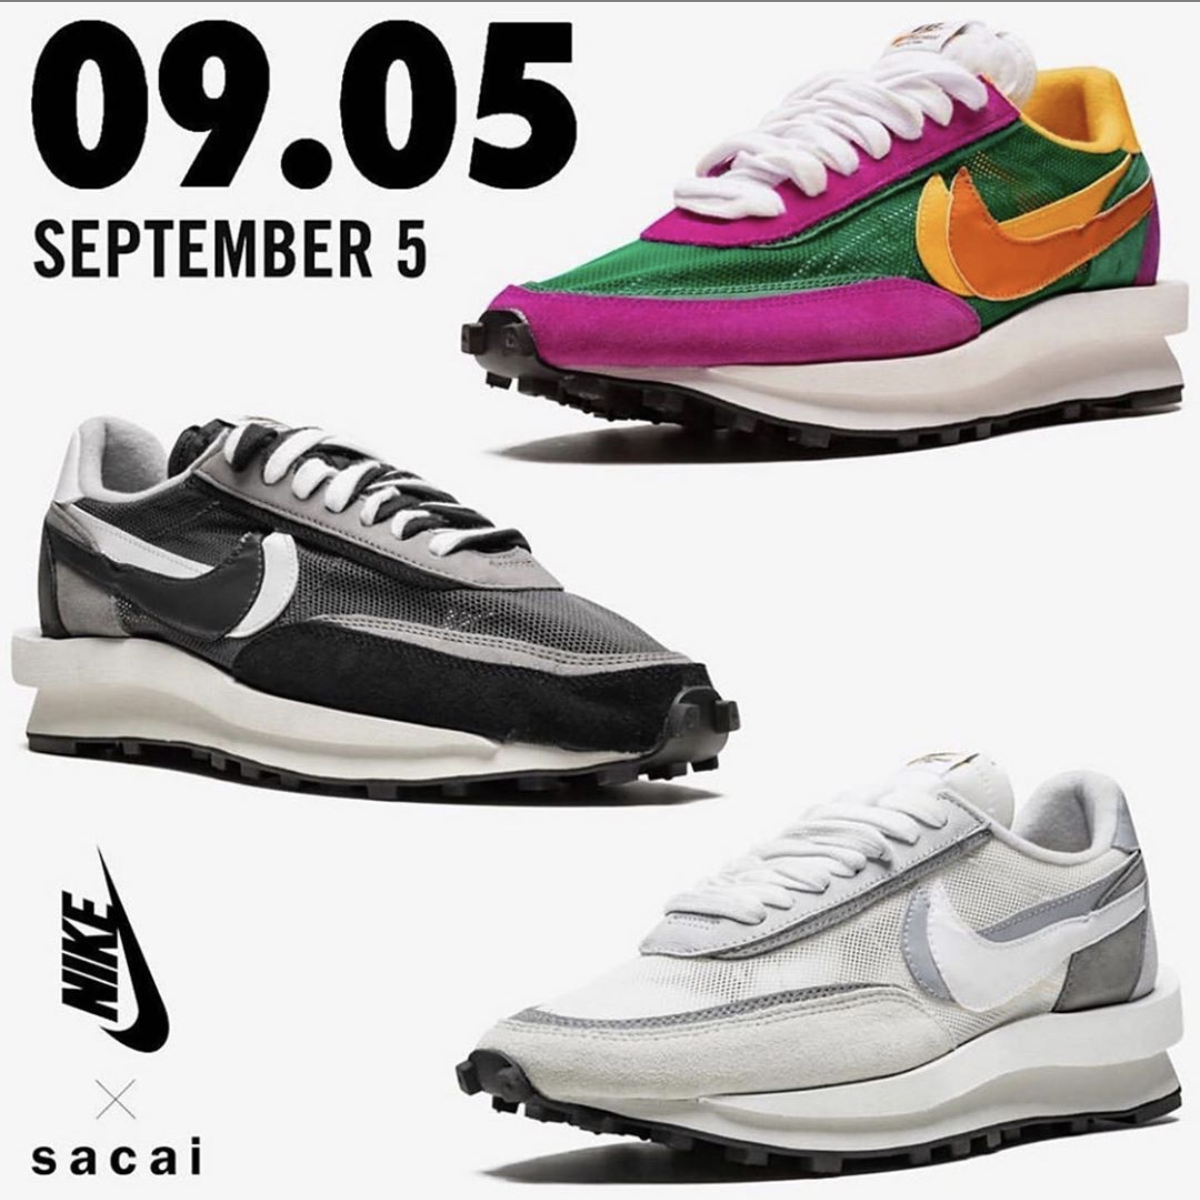 Sacai x Nike LD Waffles Sneaker release Sep 5 2019.9.5